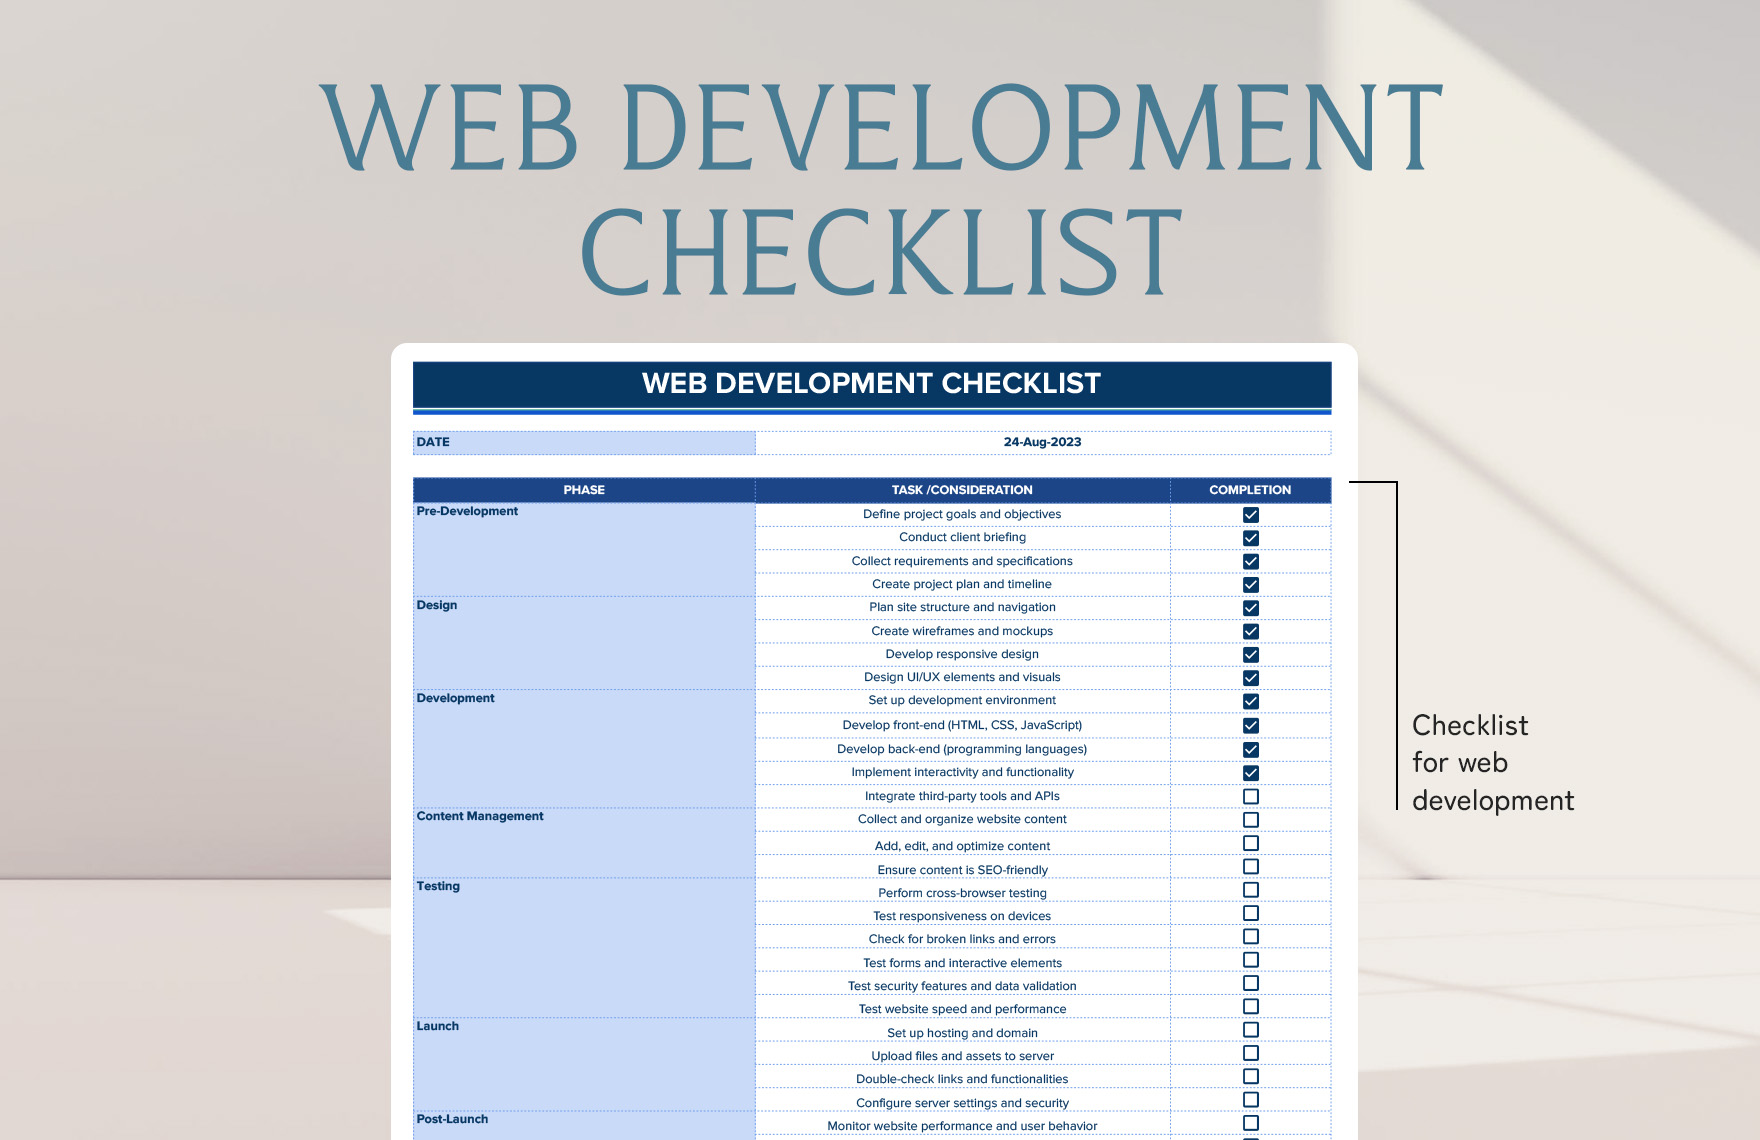 Web Development Checklist Template